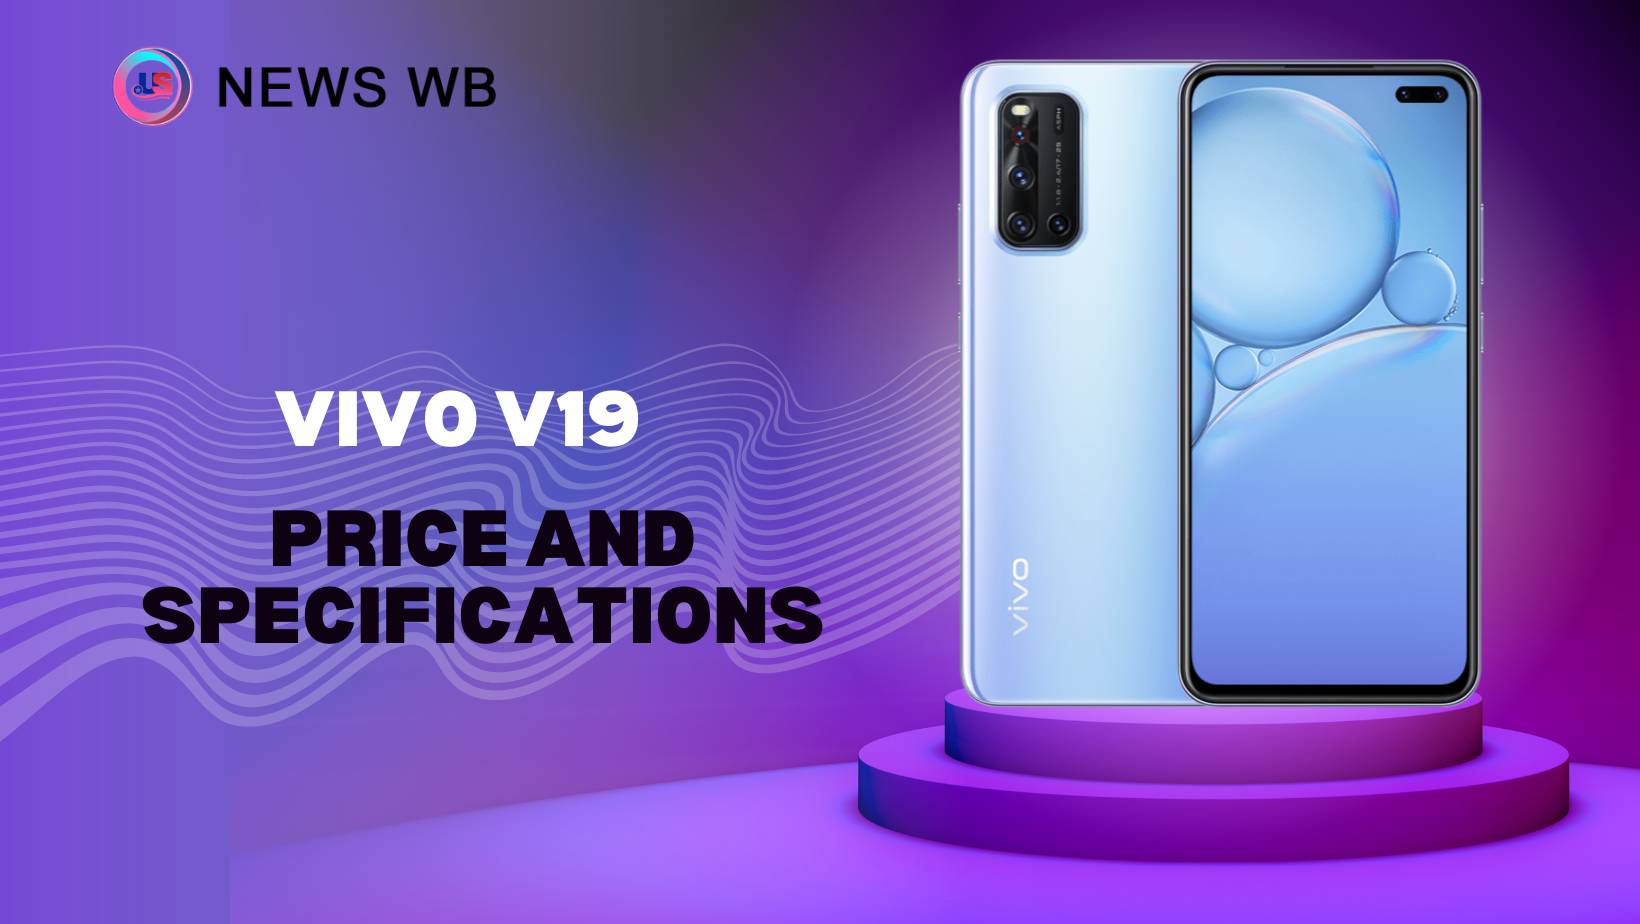 Vivo V19 Price and Specifications